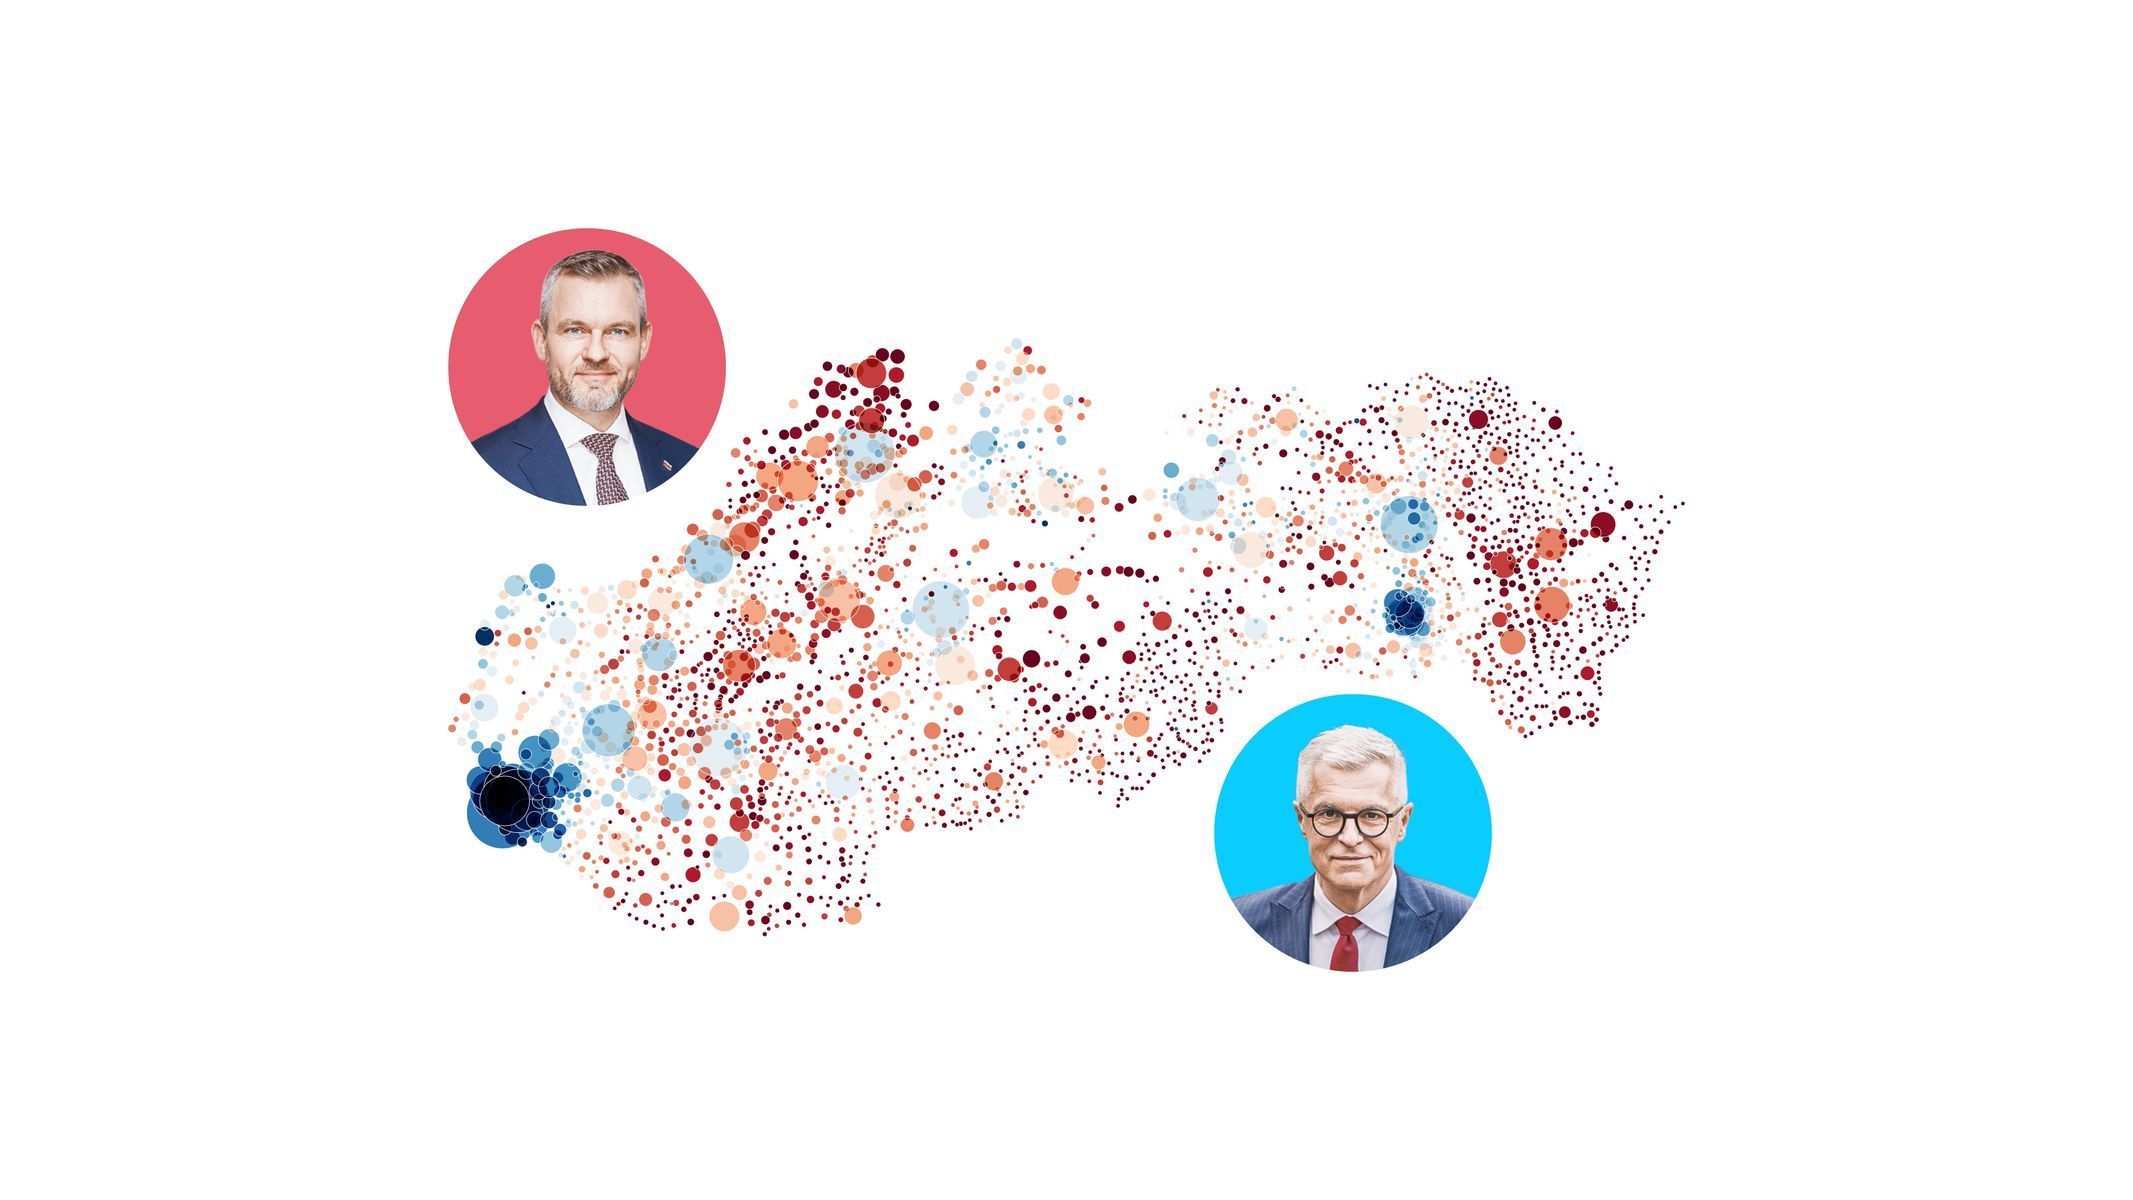 Výsledky 2. kola prezidentských voleb na Slovensku